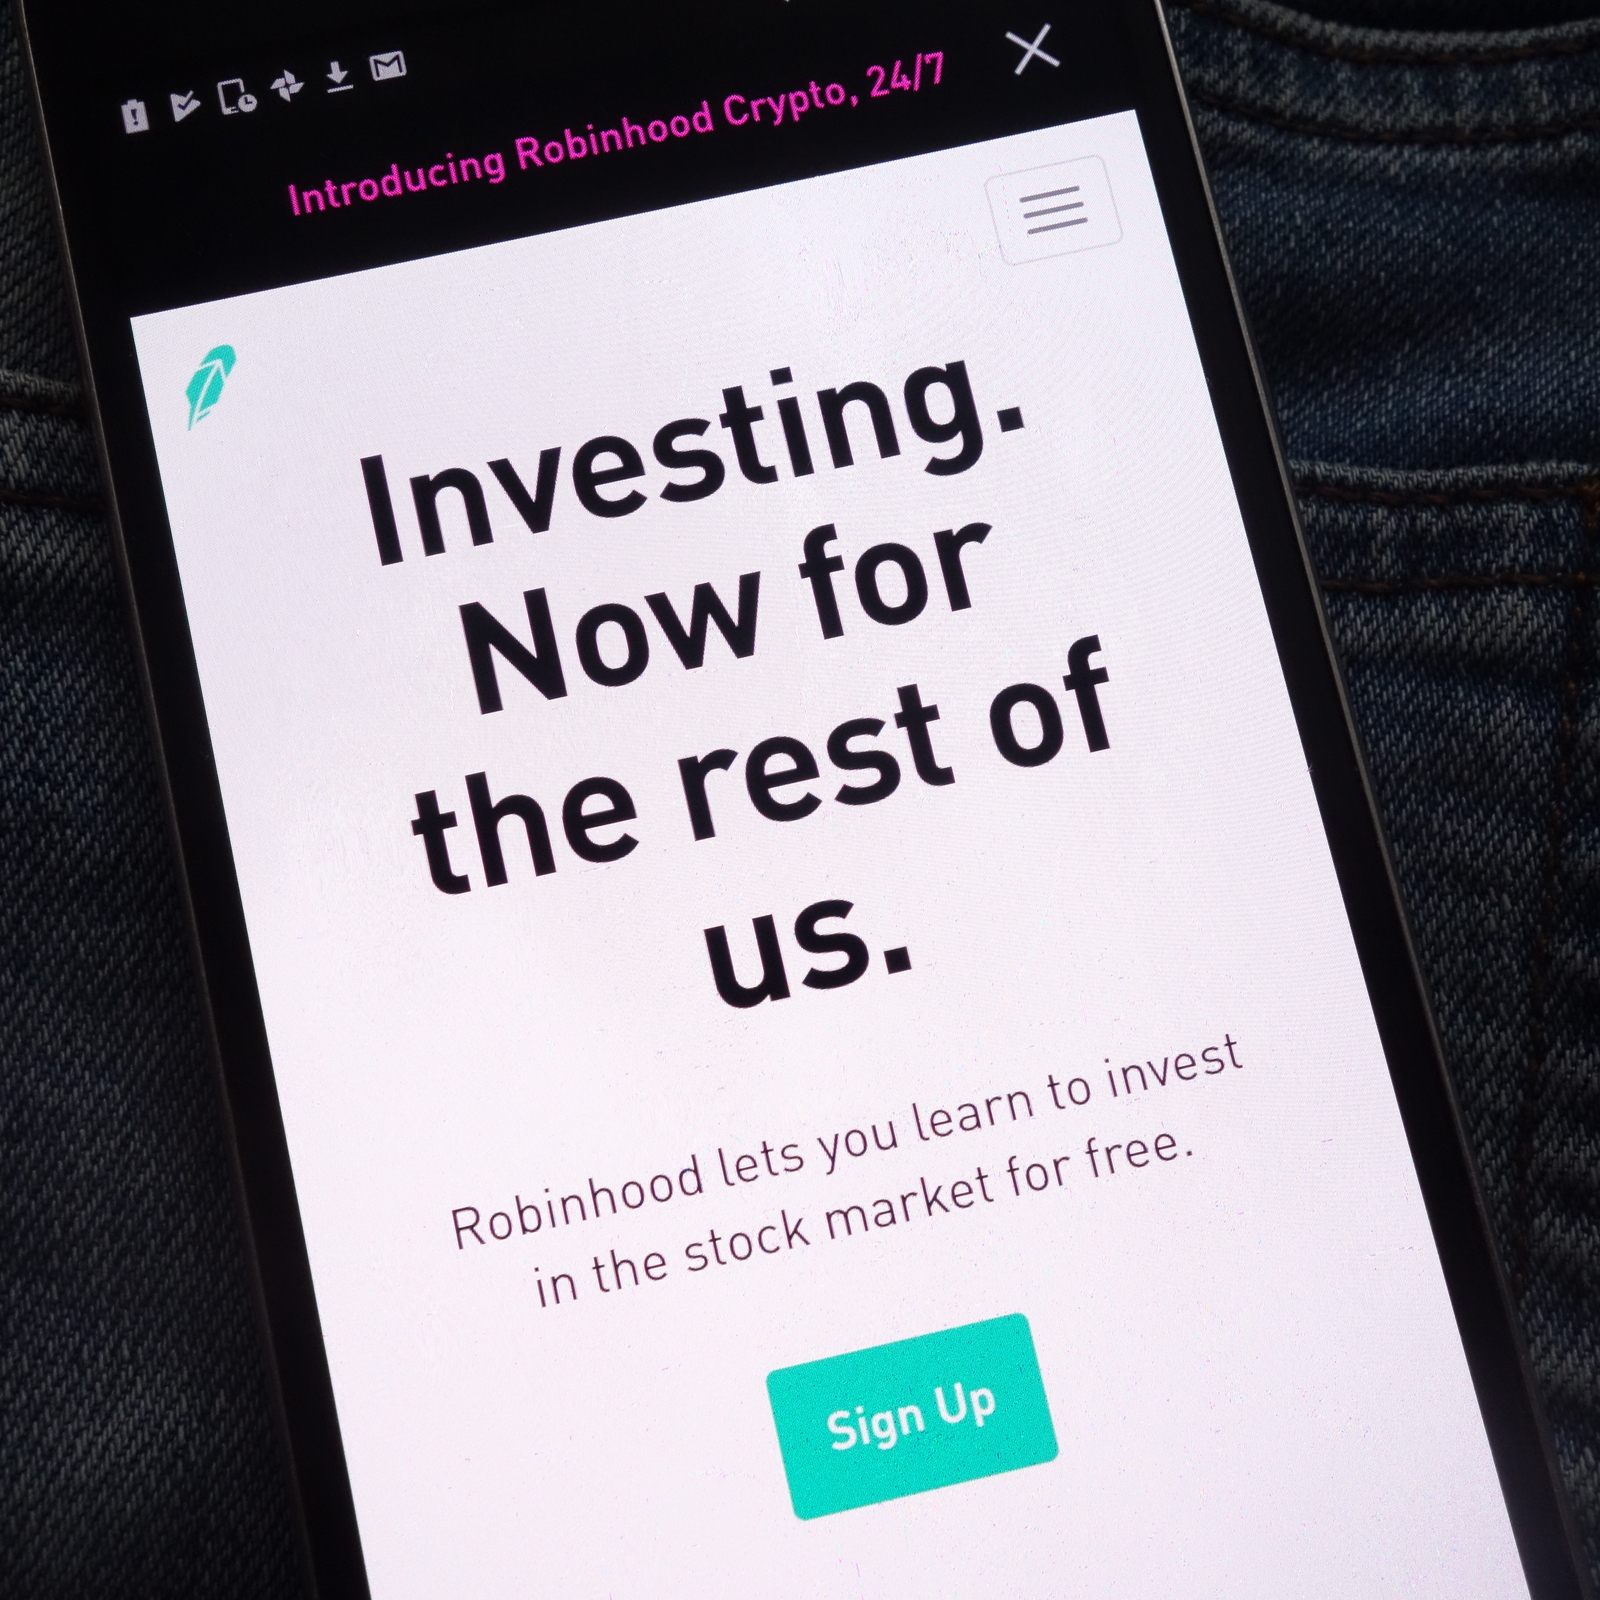 Robinhood Crypto App Adds Bitcoin Cash and Litecoin Trading